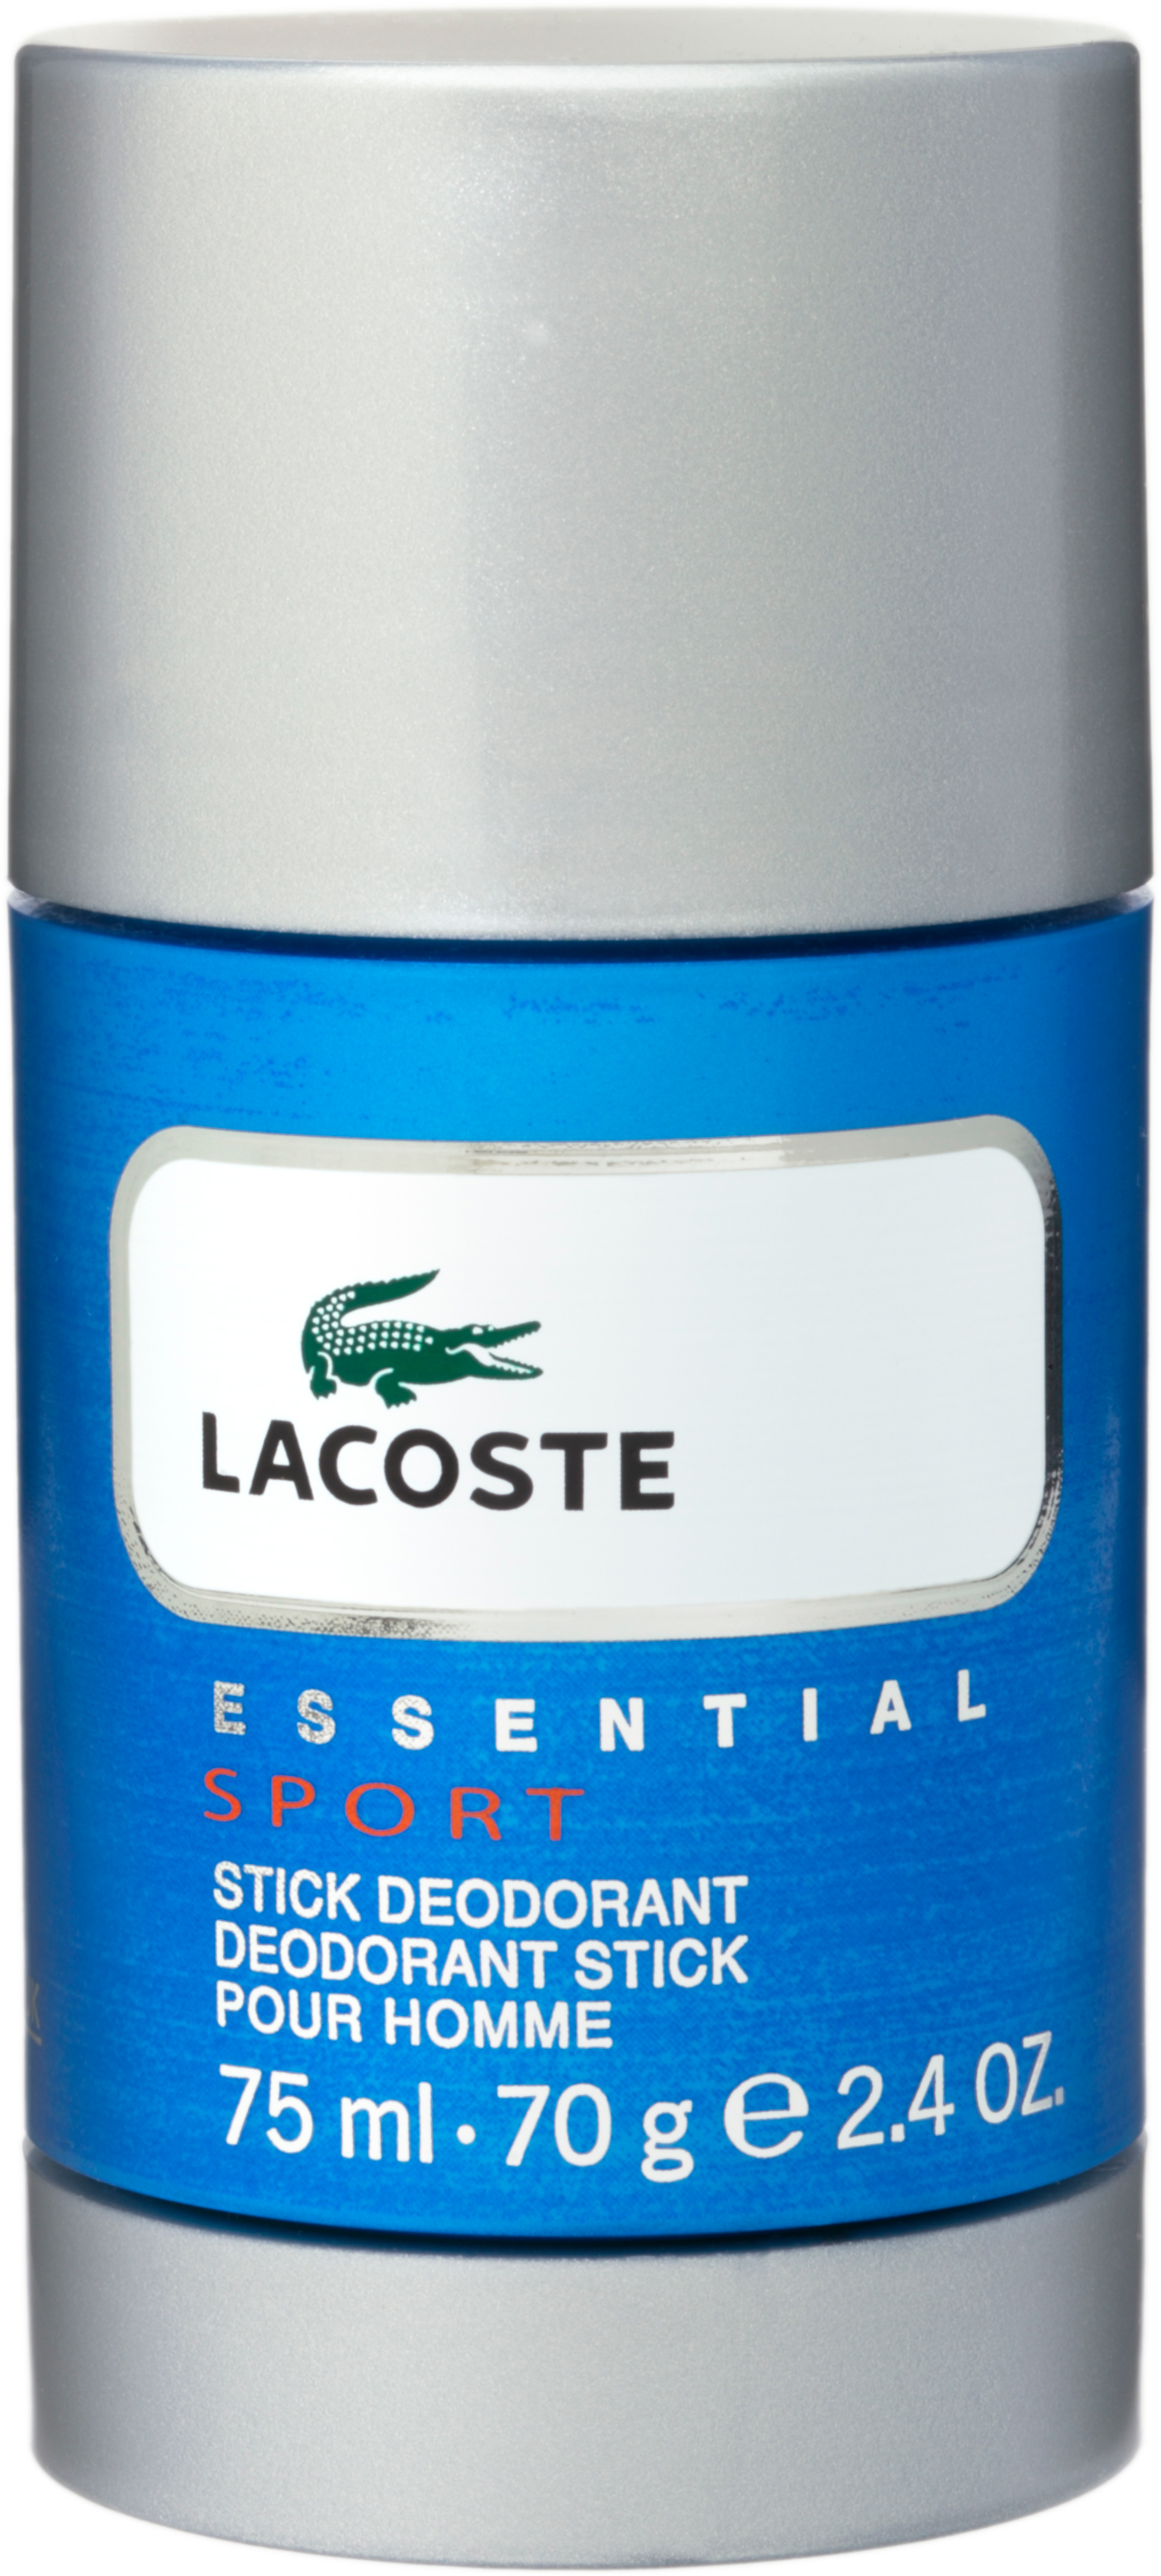 Udtømning Massage Sodavand Lacoste Essential Essential Sport Deodorant Stick Pour Homme 75 ml |  lyko.com